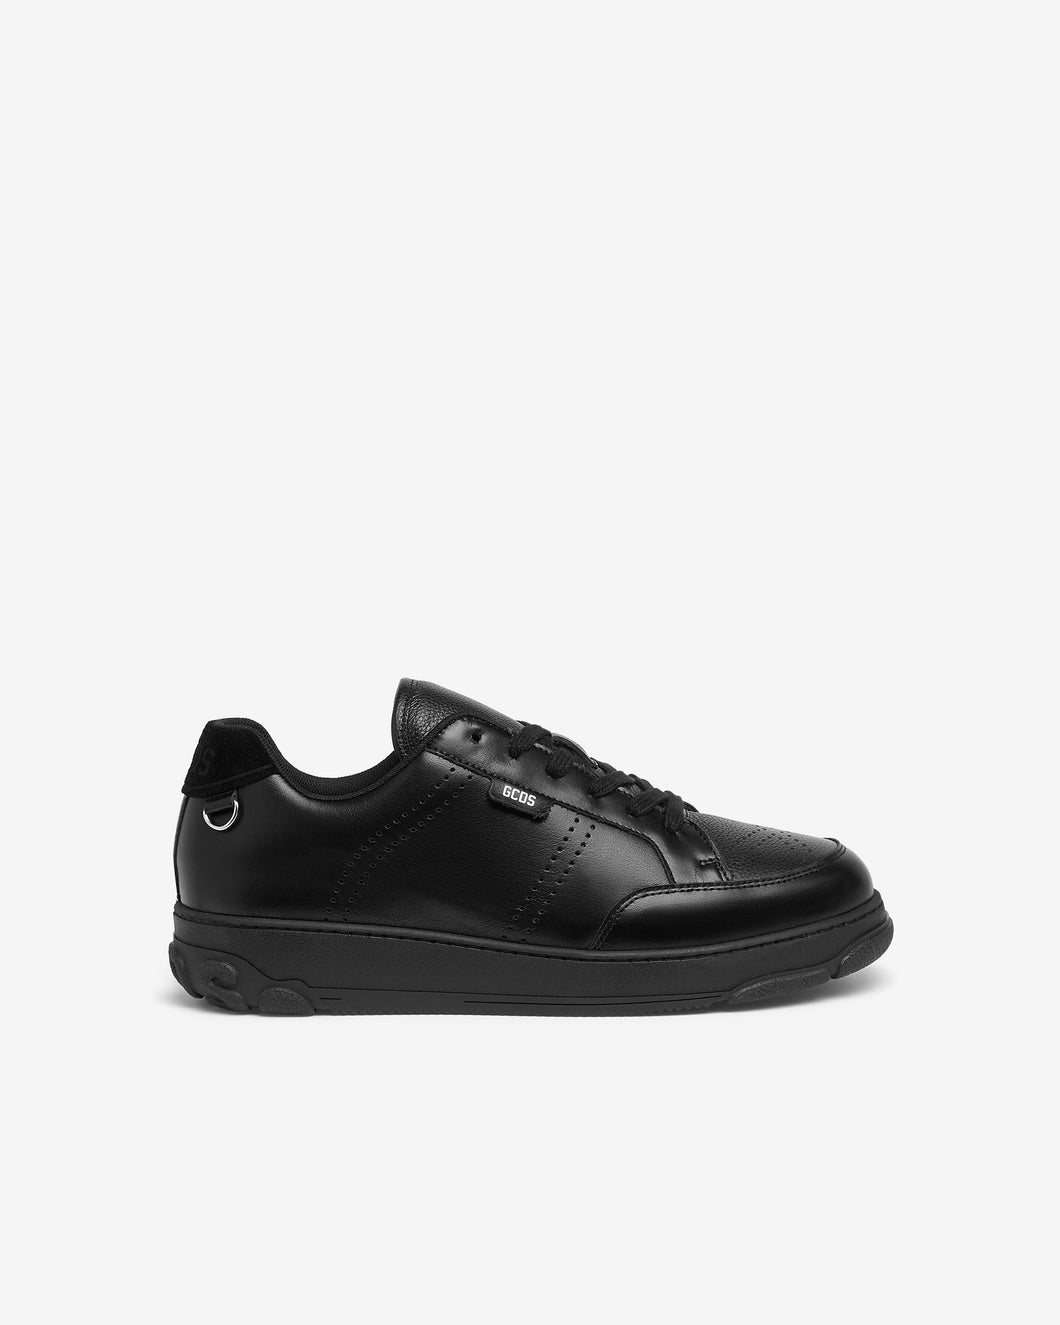 Essential Nami Sneakers : Unisex Shoes Black | GCDS